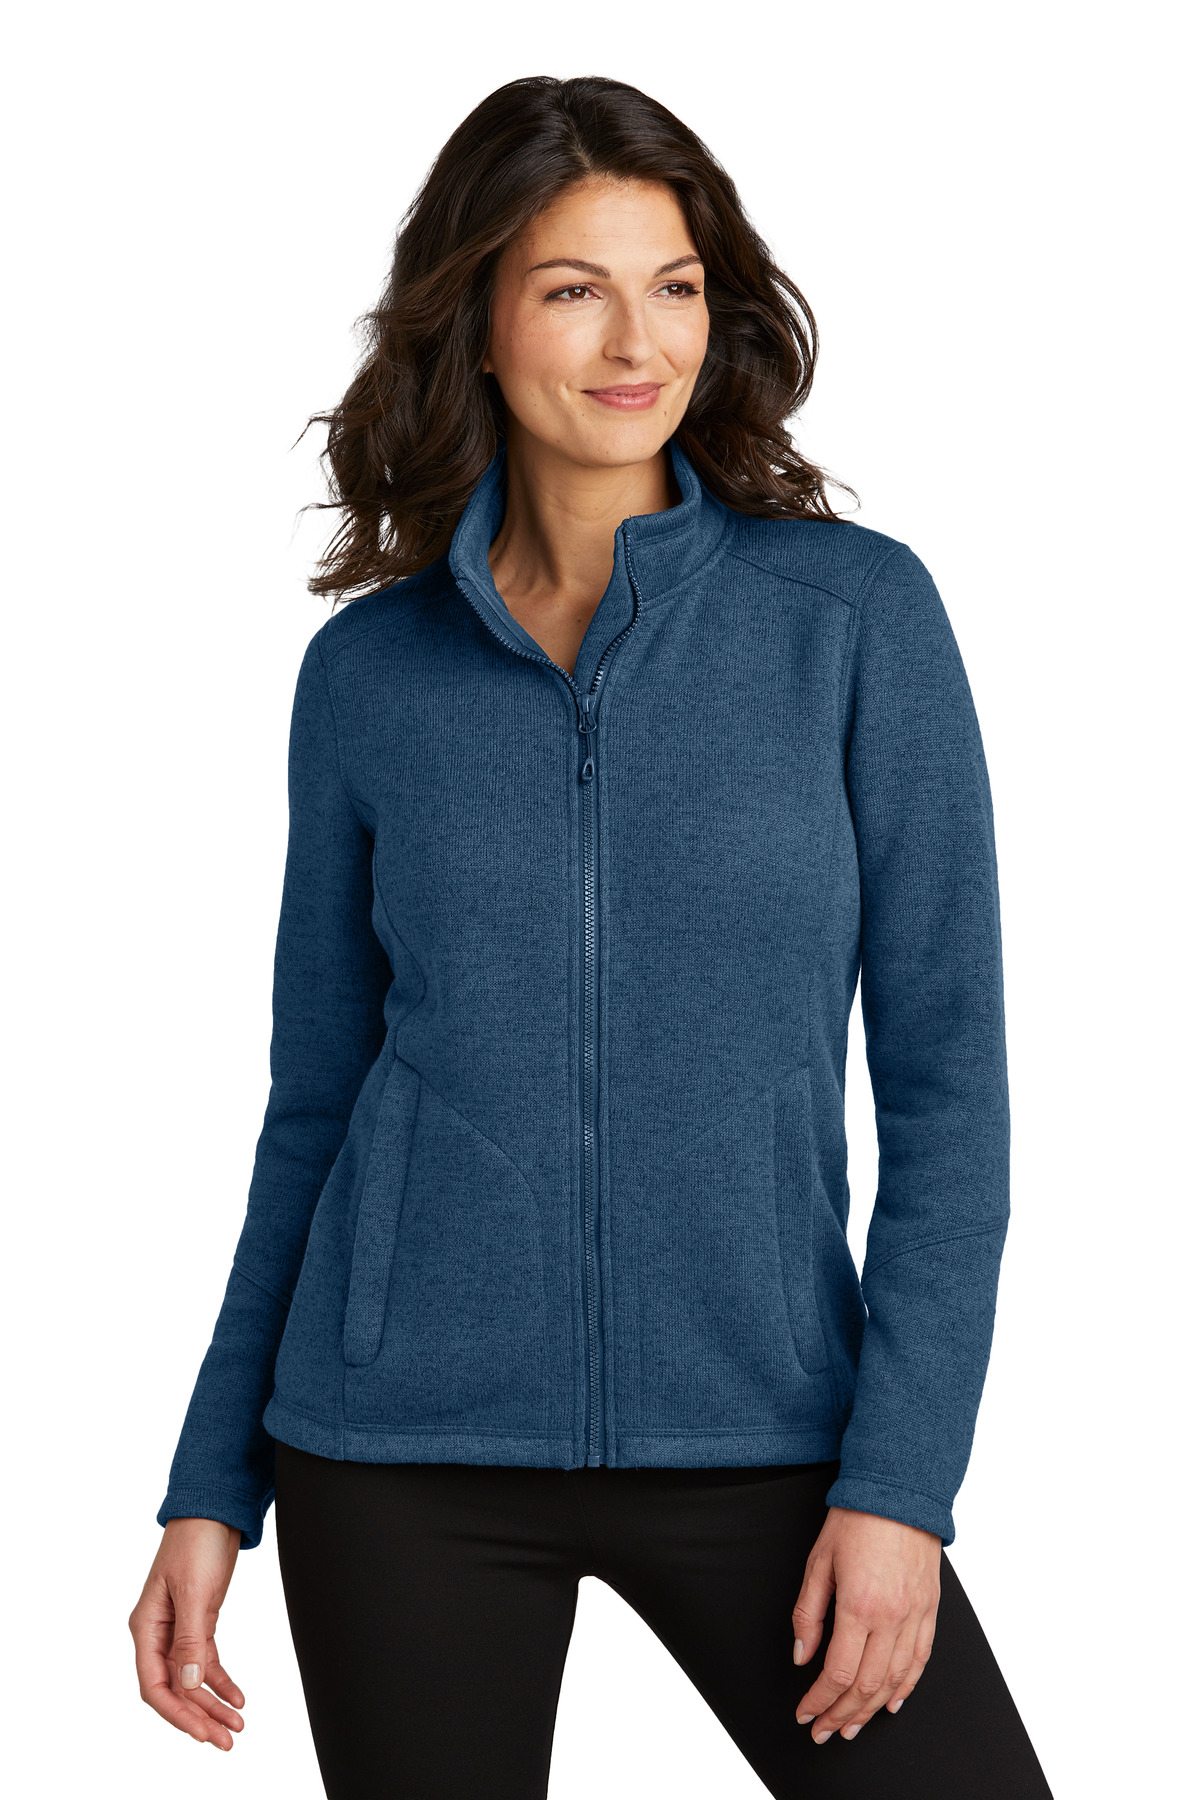 Port Authority Ladies Arc Sweater Fleece Jacket L428